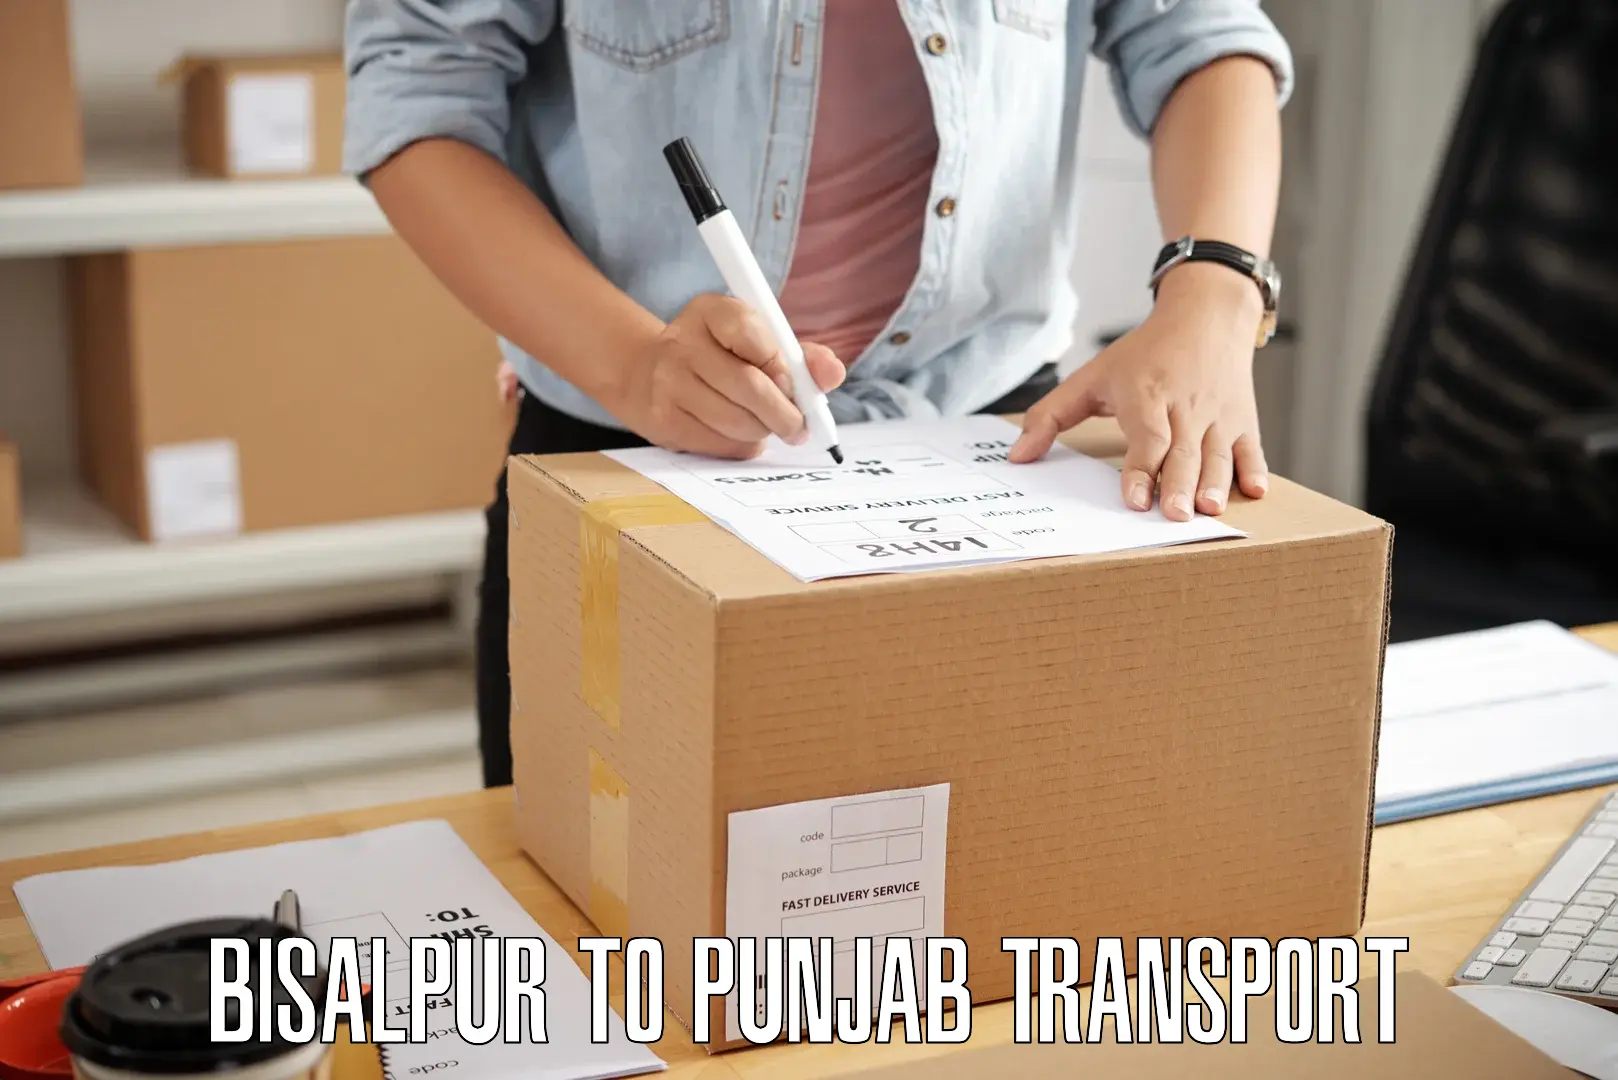 Scooty parcel Bisalpur to Punjab